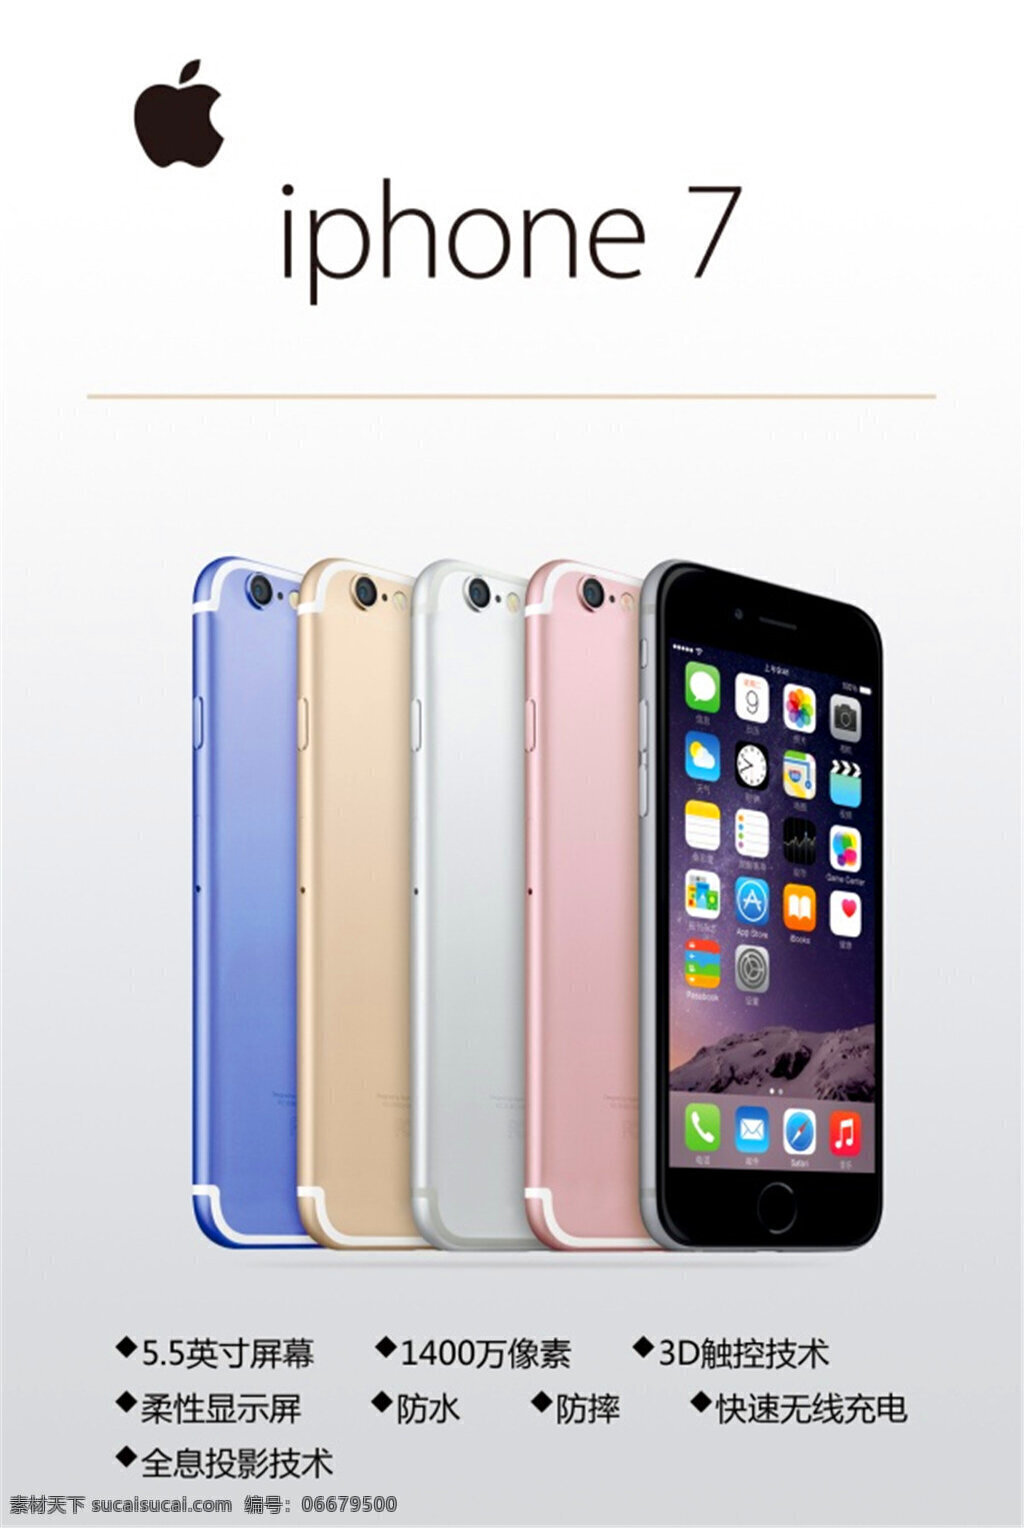 iphone7 手机 广告 苹果7 智能手机 手机广告 广告模板